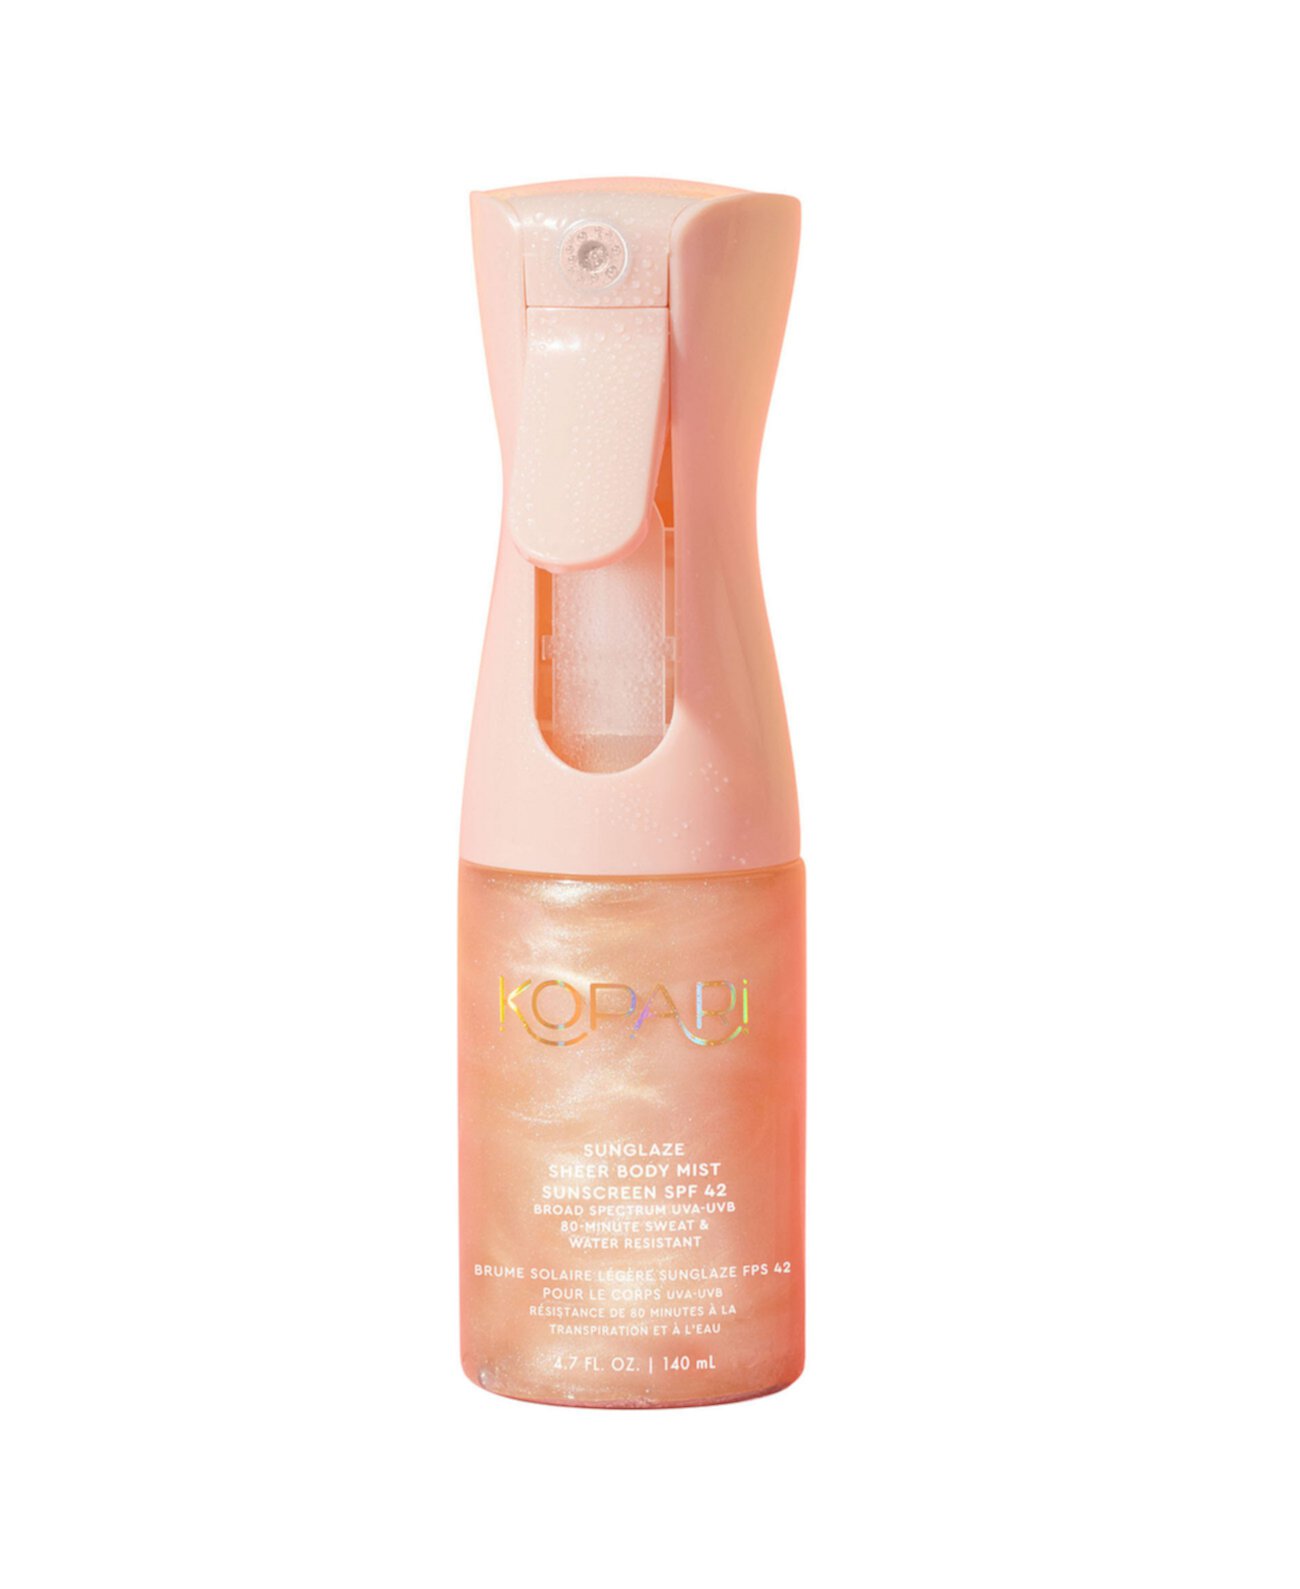 Sunglaze Sheer Body Mist Sunscreen SPF 42, 4.7 oz. Kopari Beauty